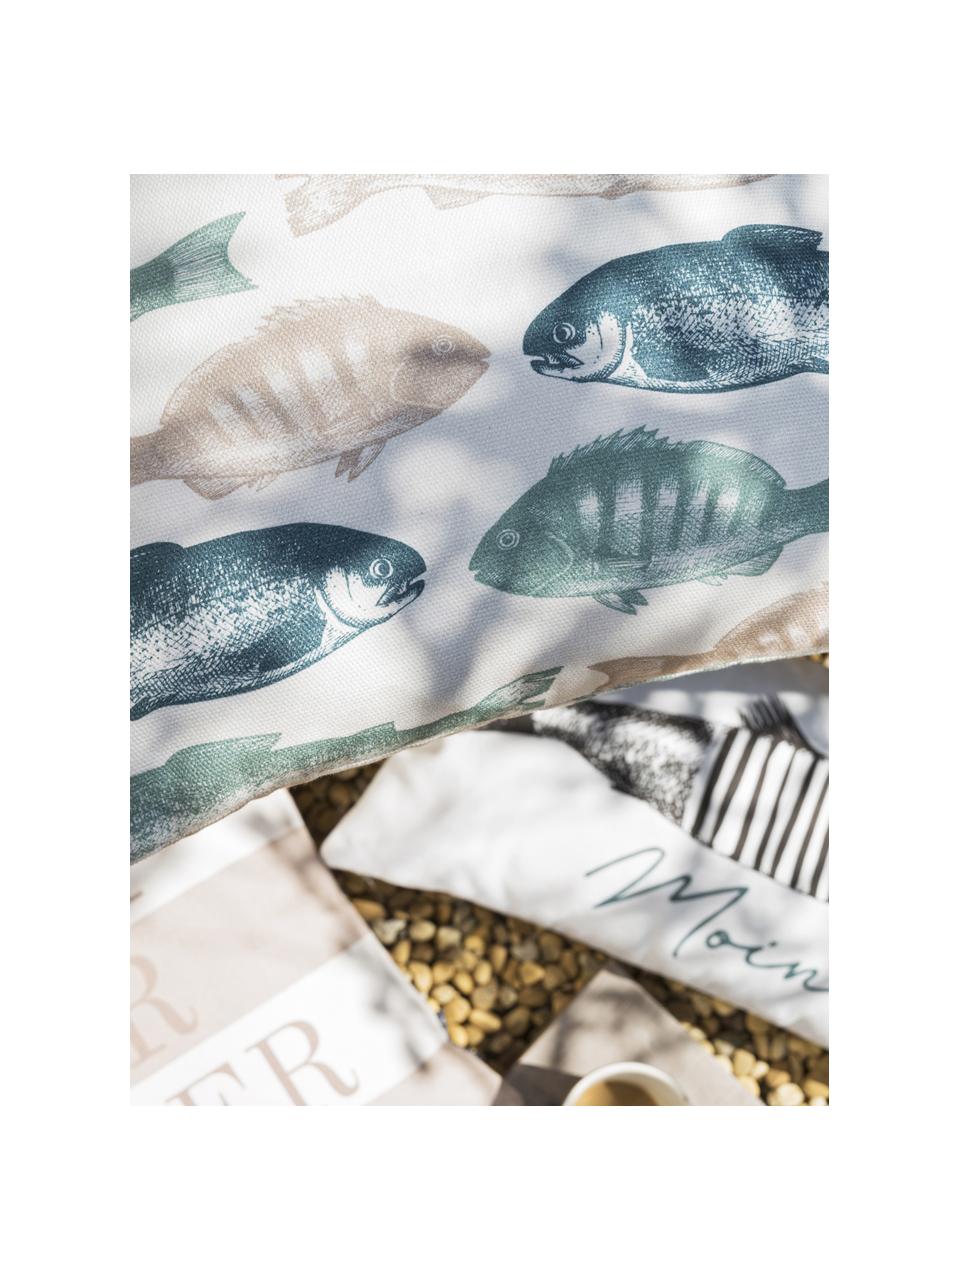 Housse de coussin 40x40 motif poissons Maritim, 100 % coton, Beige, bleu, vert menthe, larg. 40 x long. 40 cm